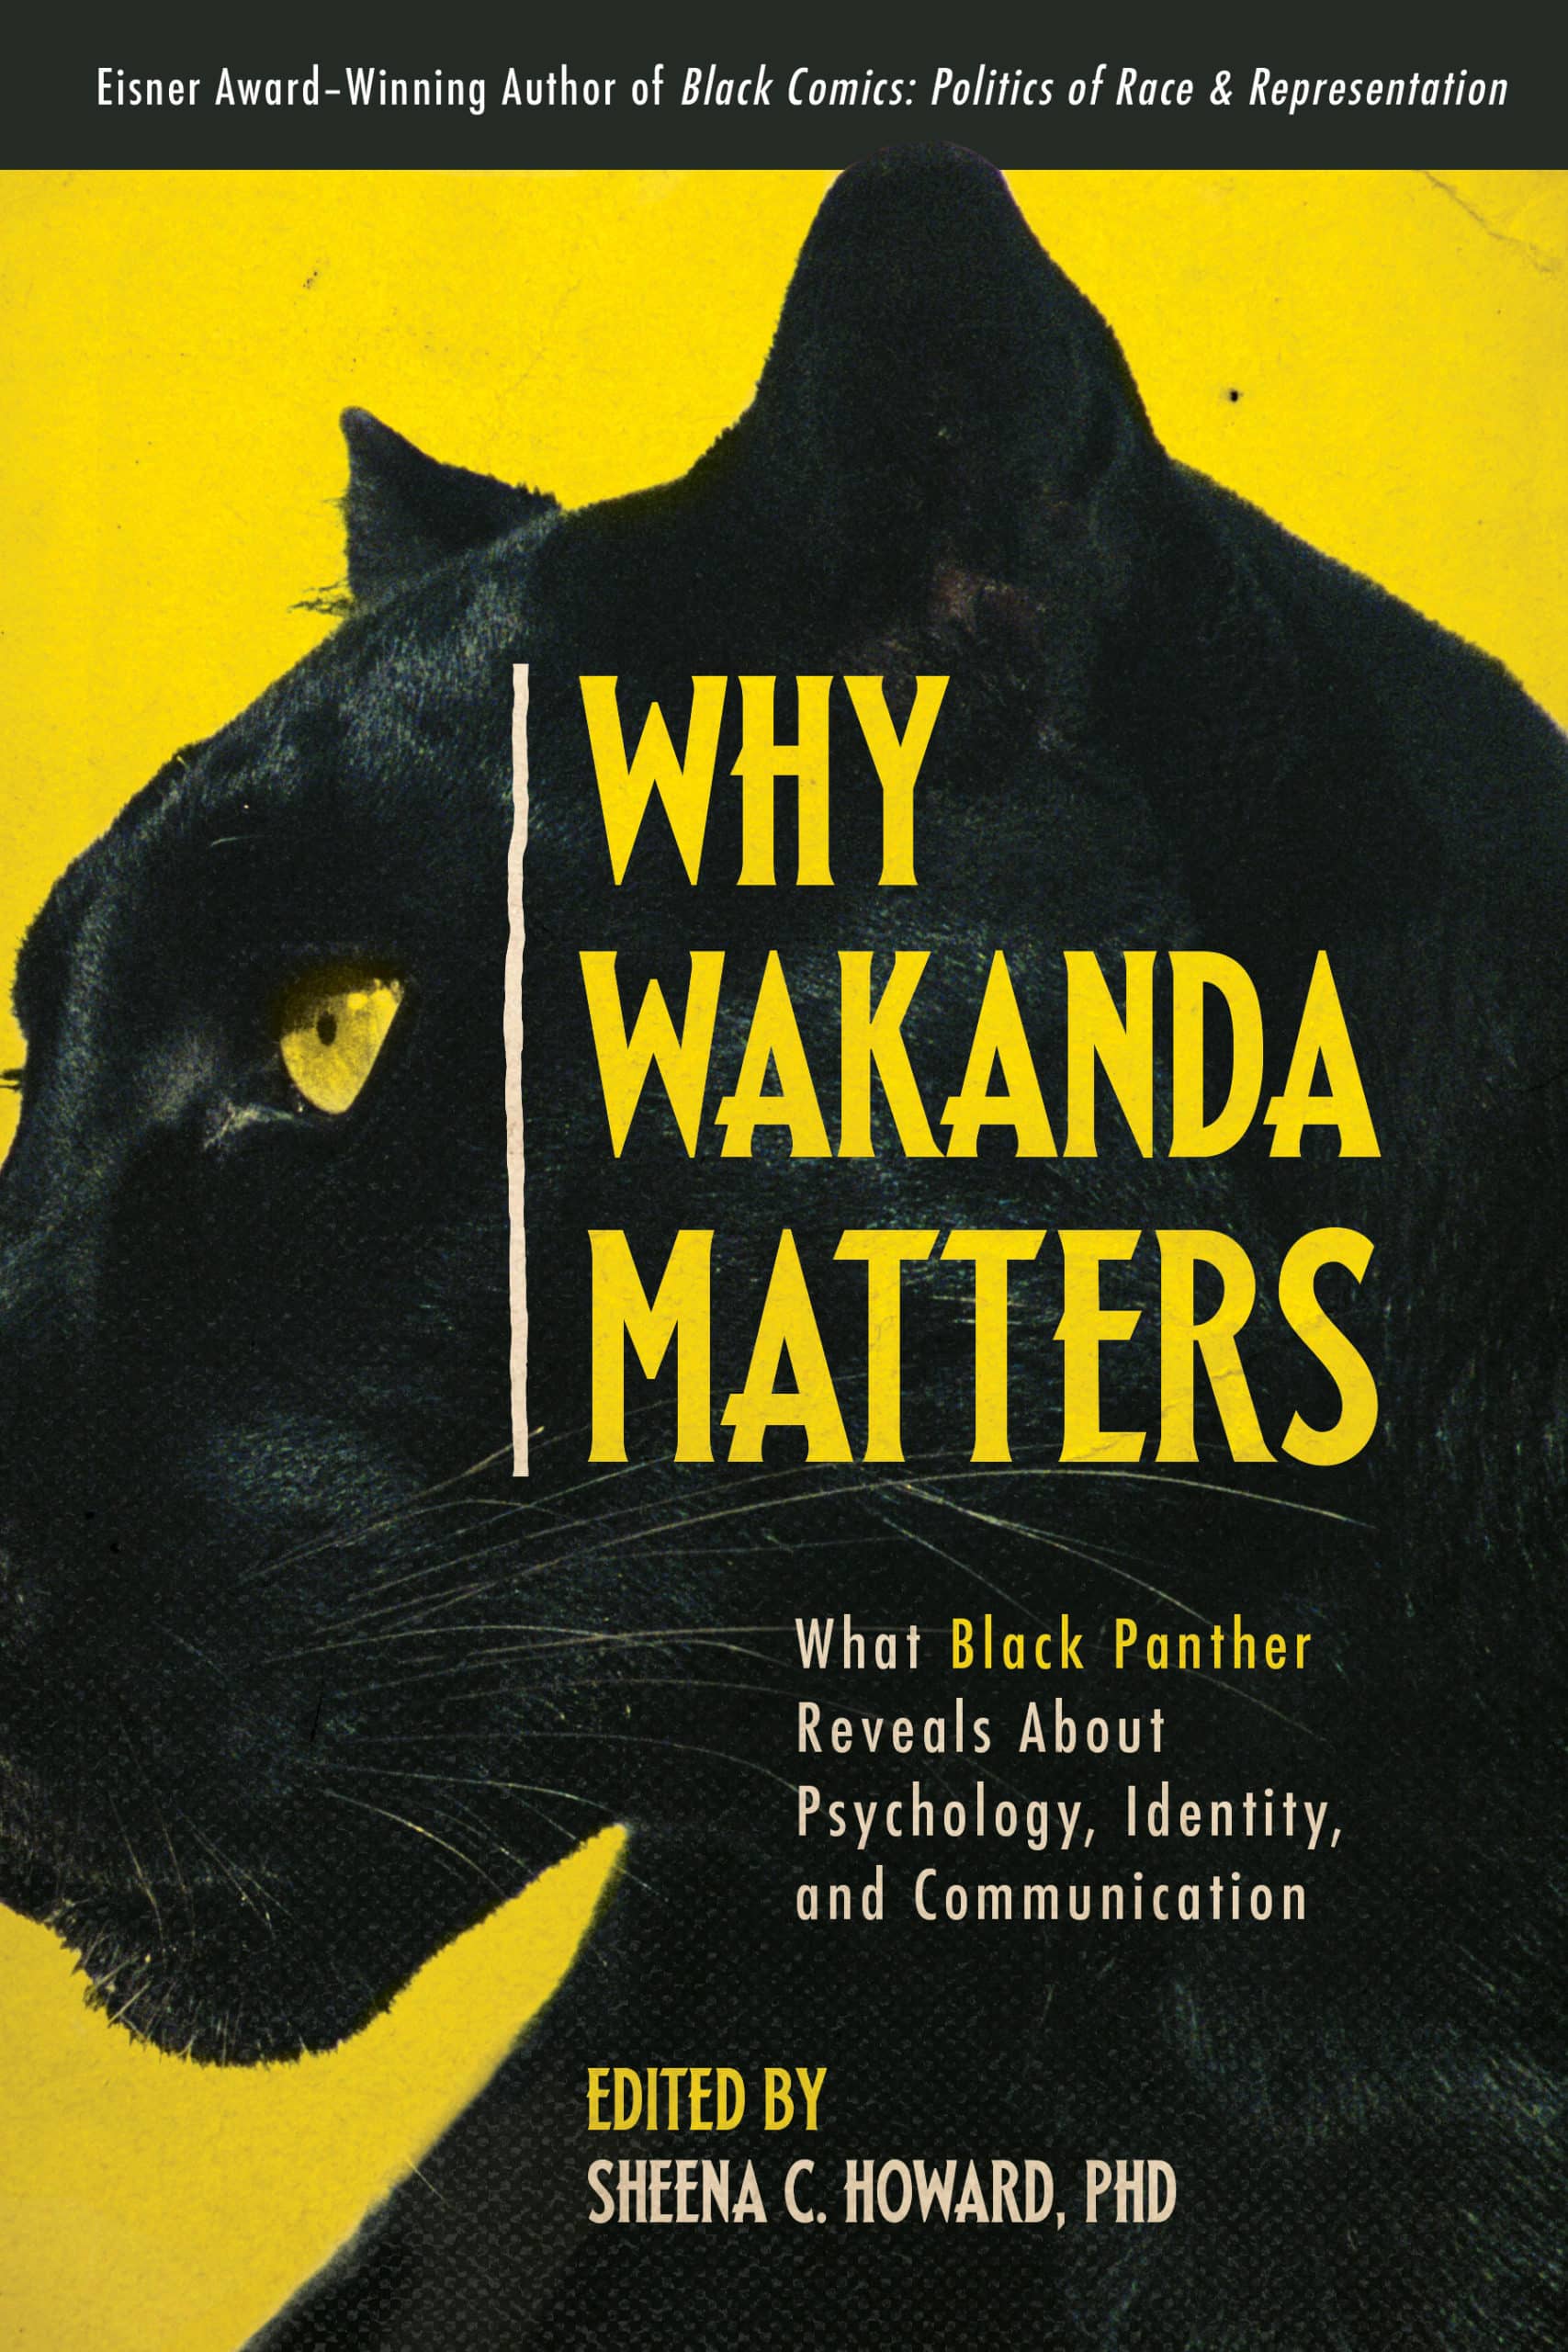 Book cover of Why Wakanda Matters, edited by Sheena C. Howard